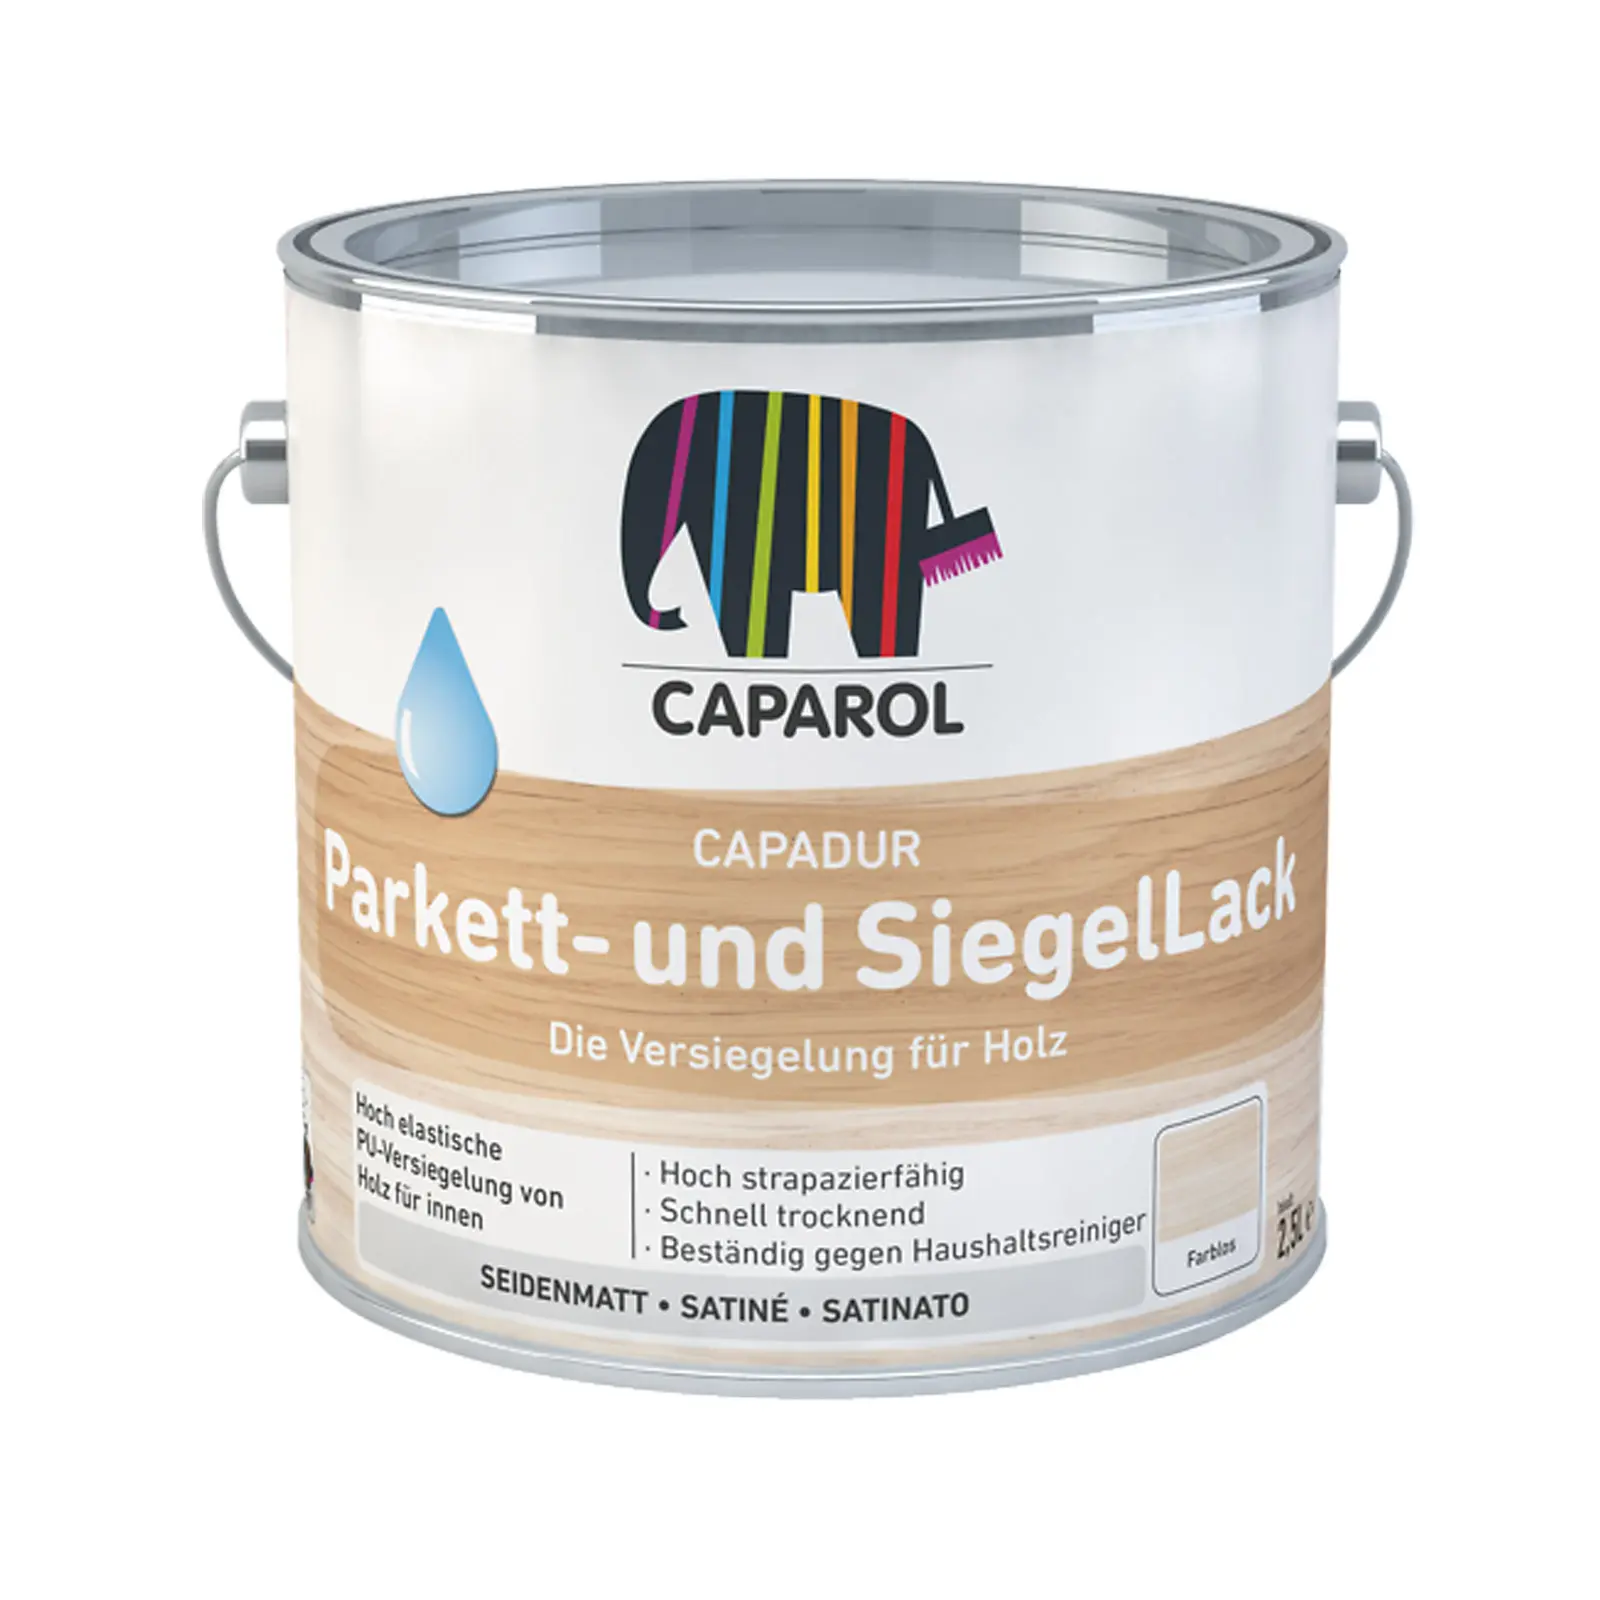 Caparol Capadur Parkett- und Siegellack, seidenmatt, 2,5 Liter